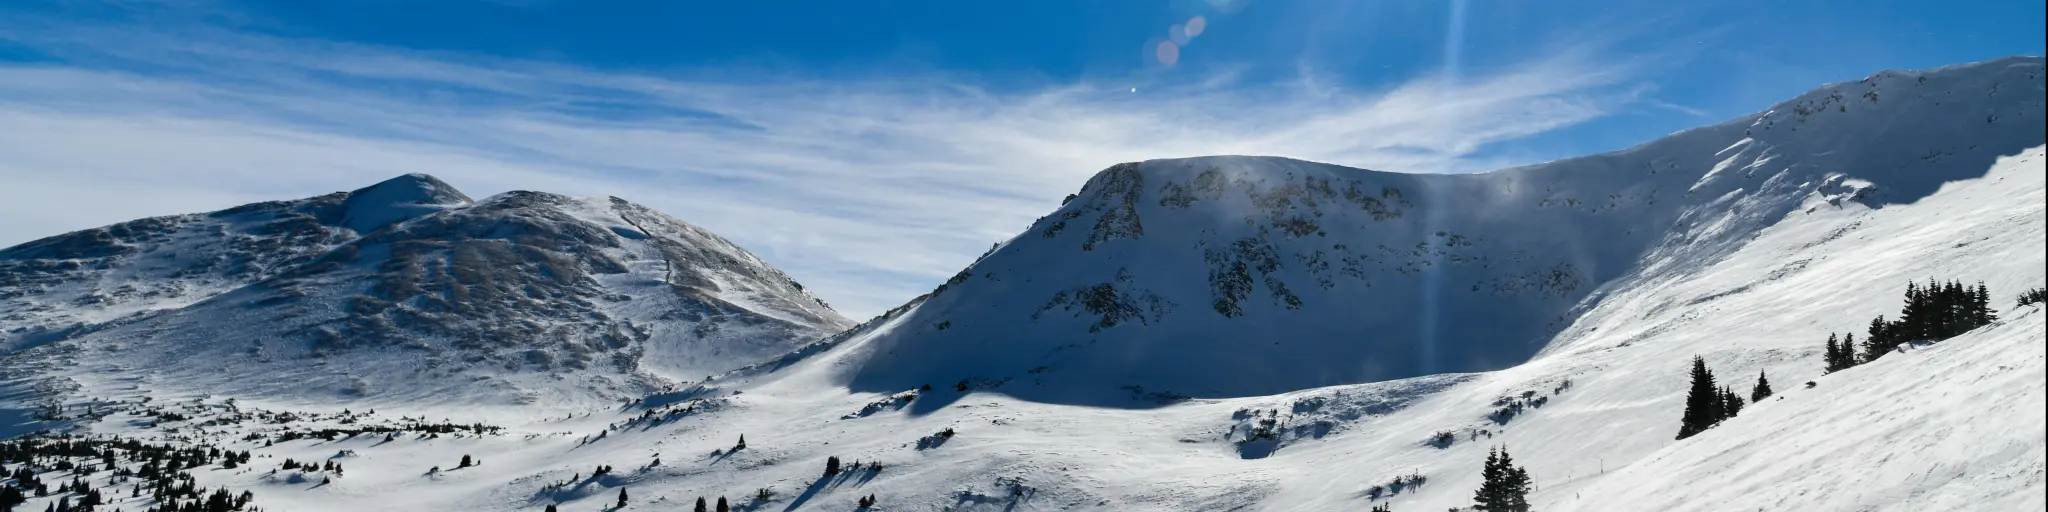 Breckenridge Colorado mountain view, with snow glistening in the bright sun and a blue sky above